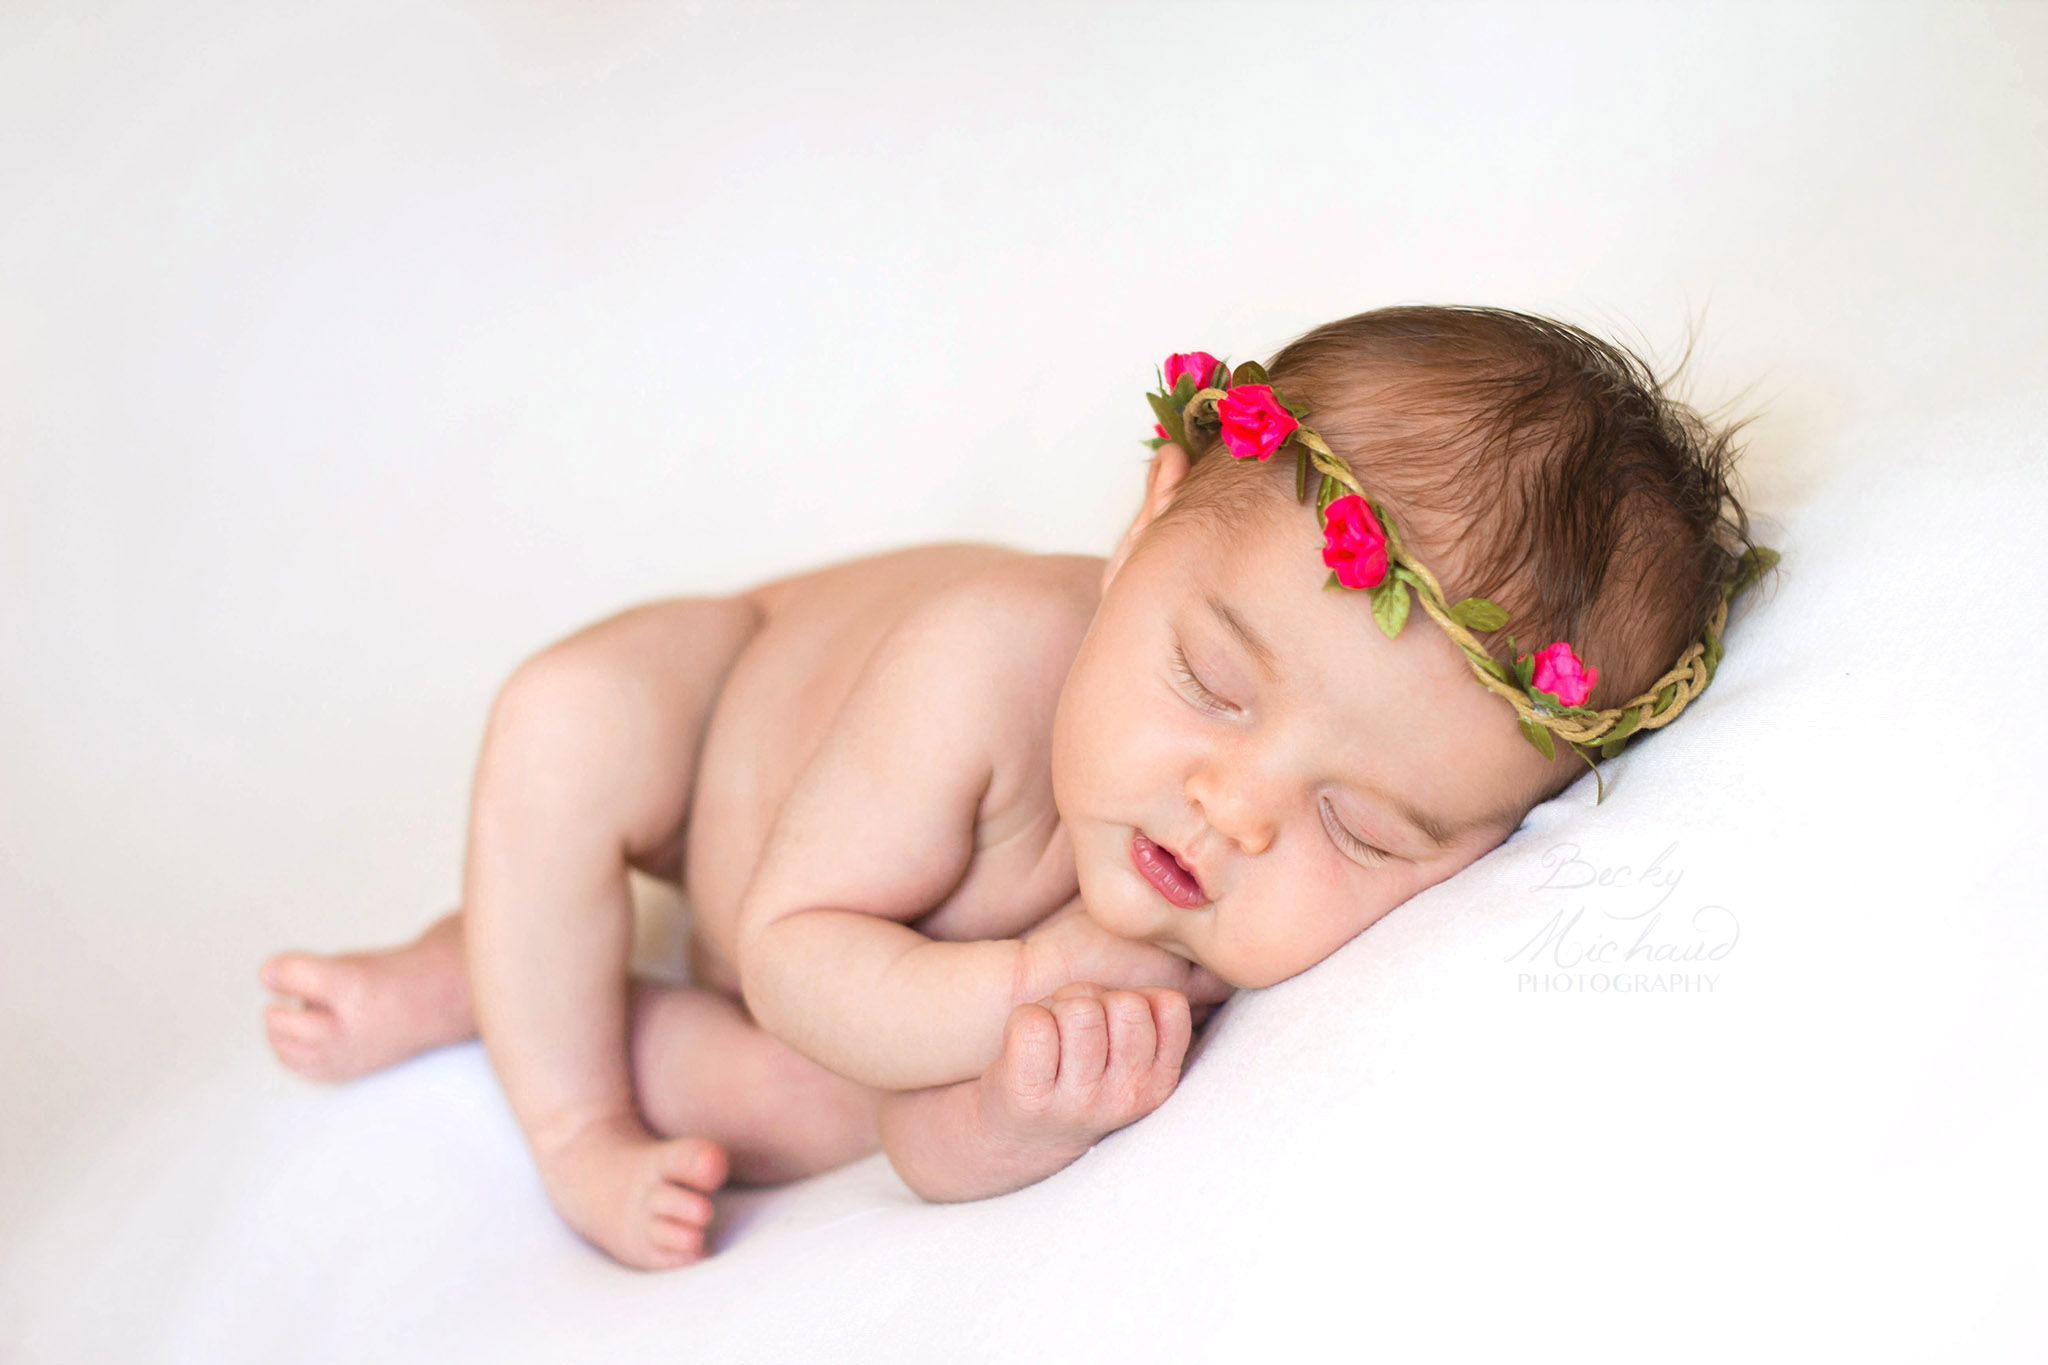 newborn baby girl with pink flower crown